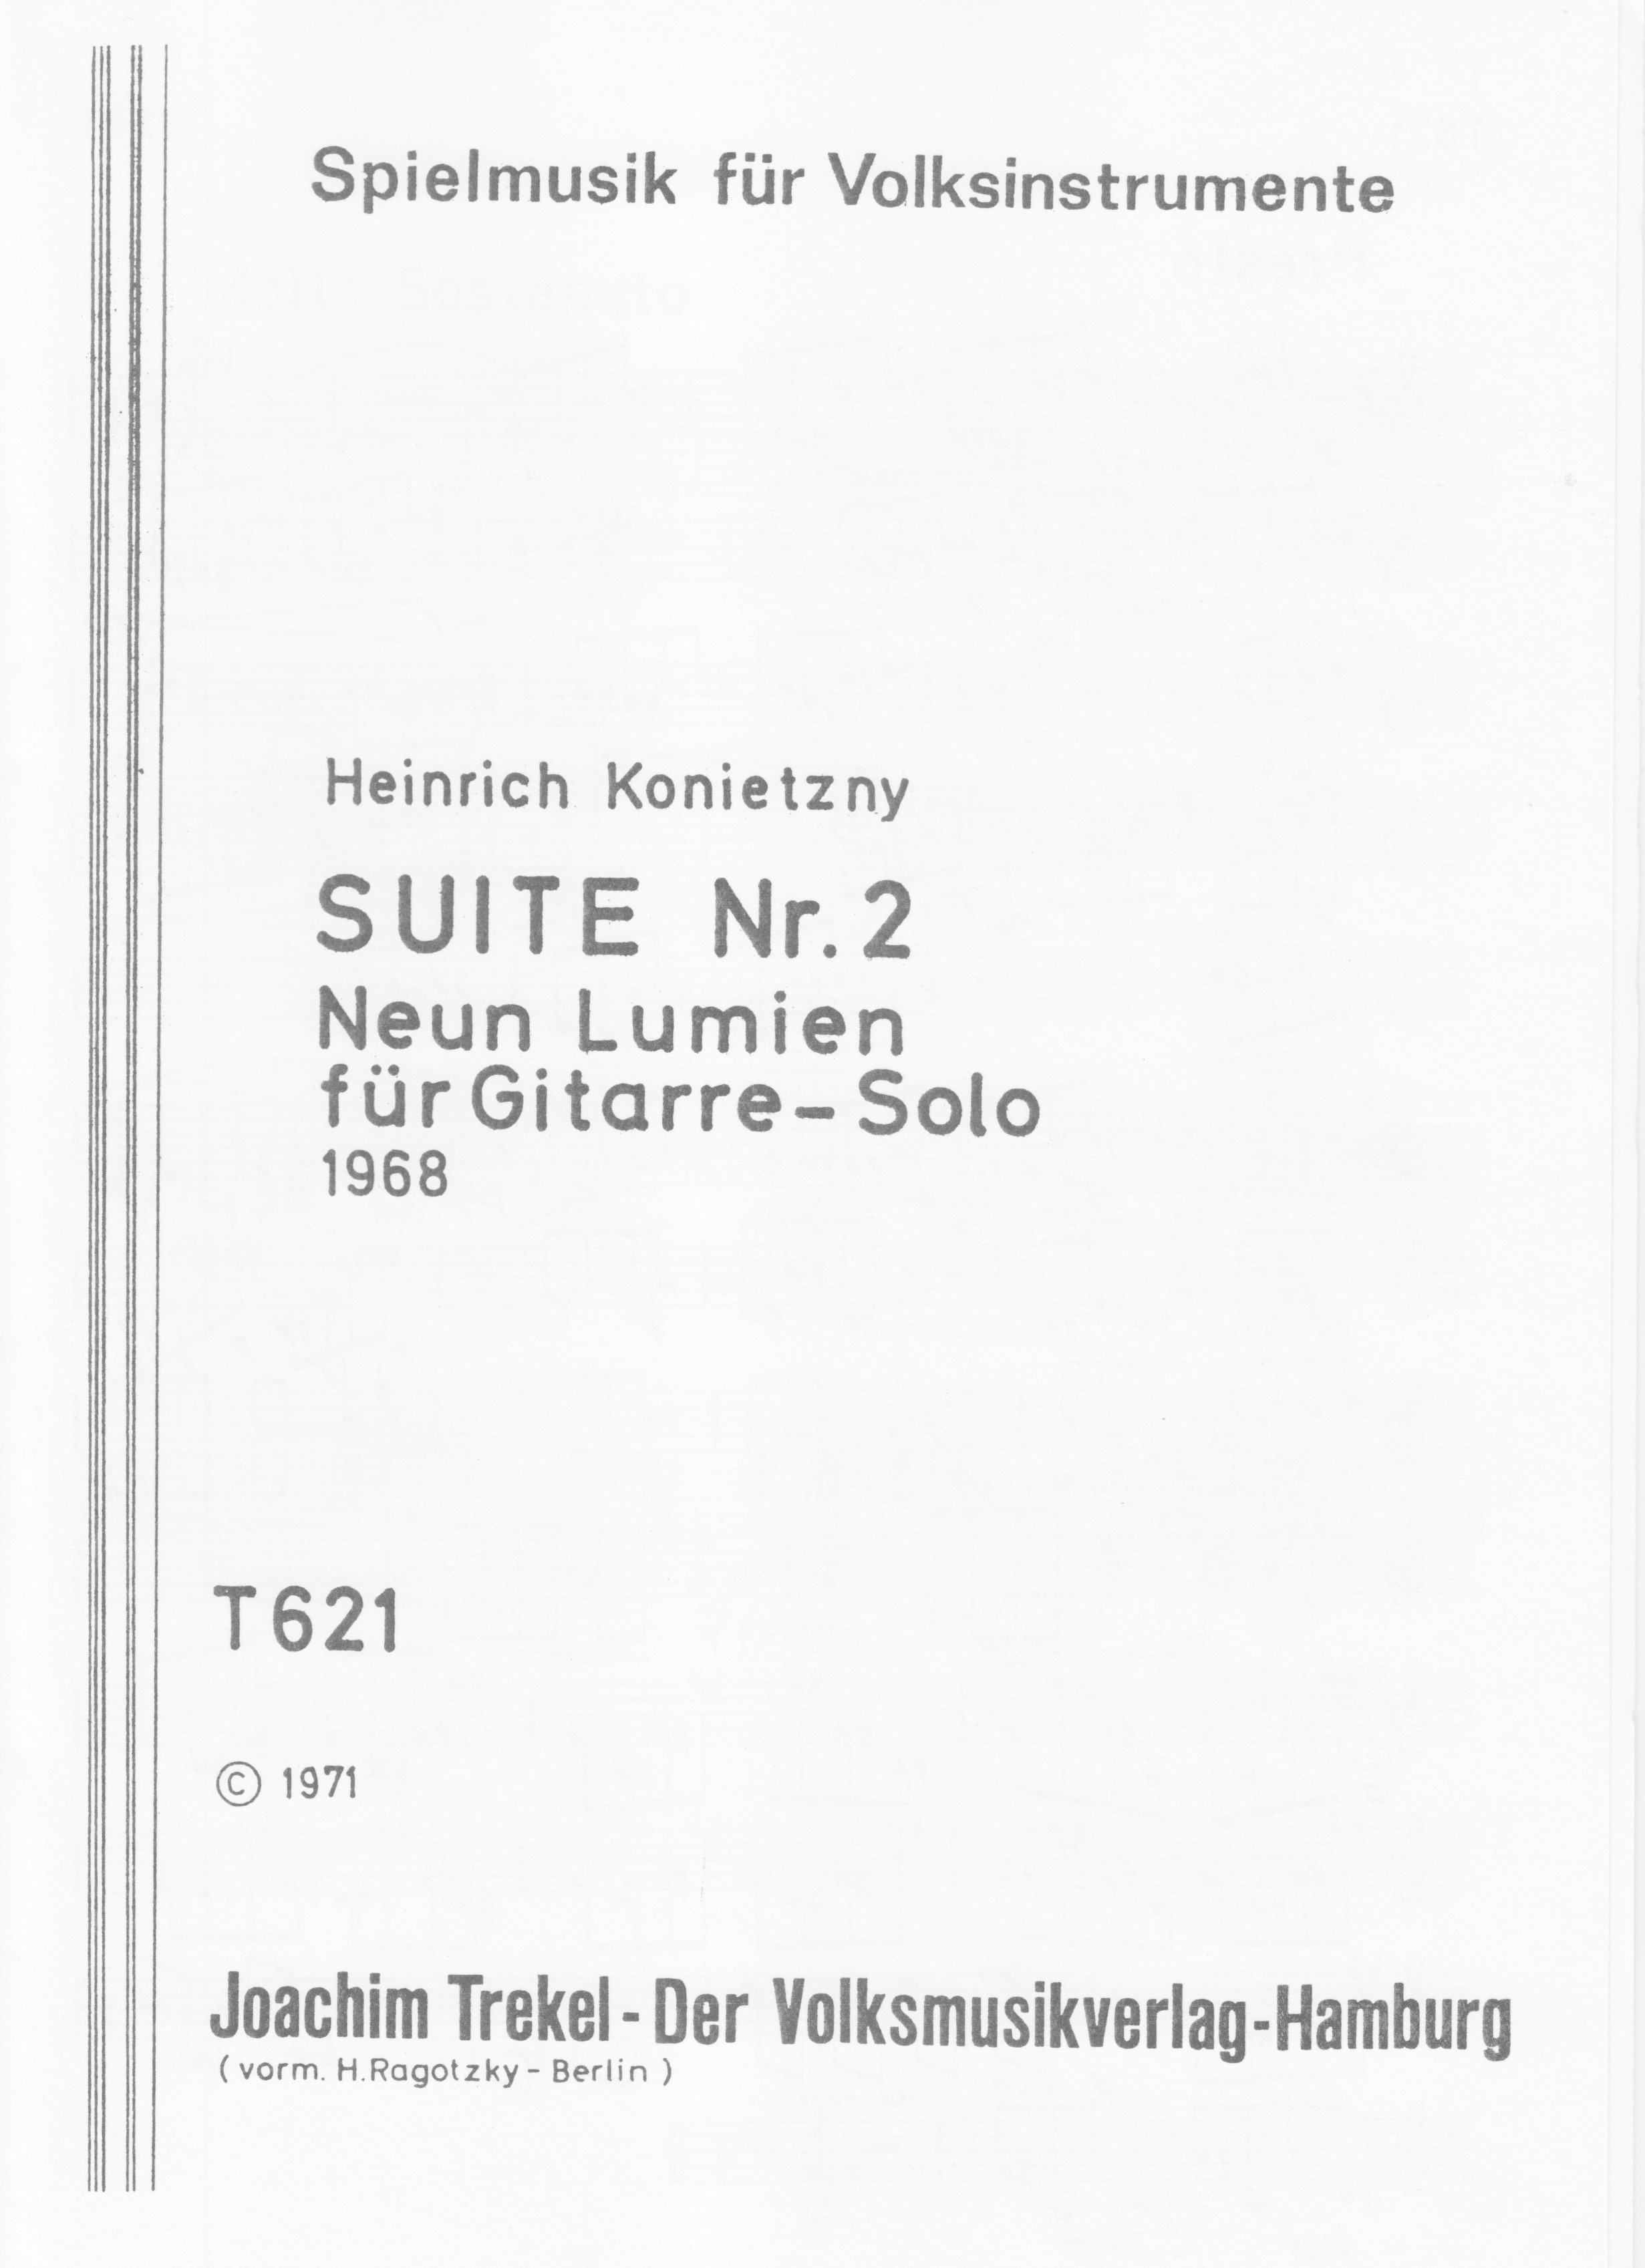 Suite Nr. 2